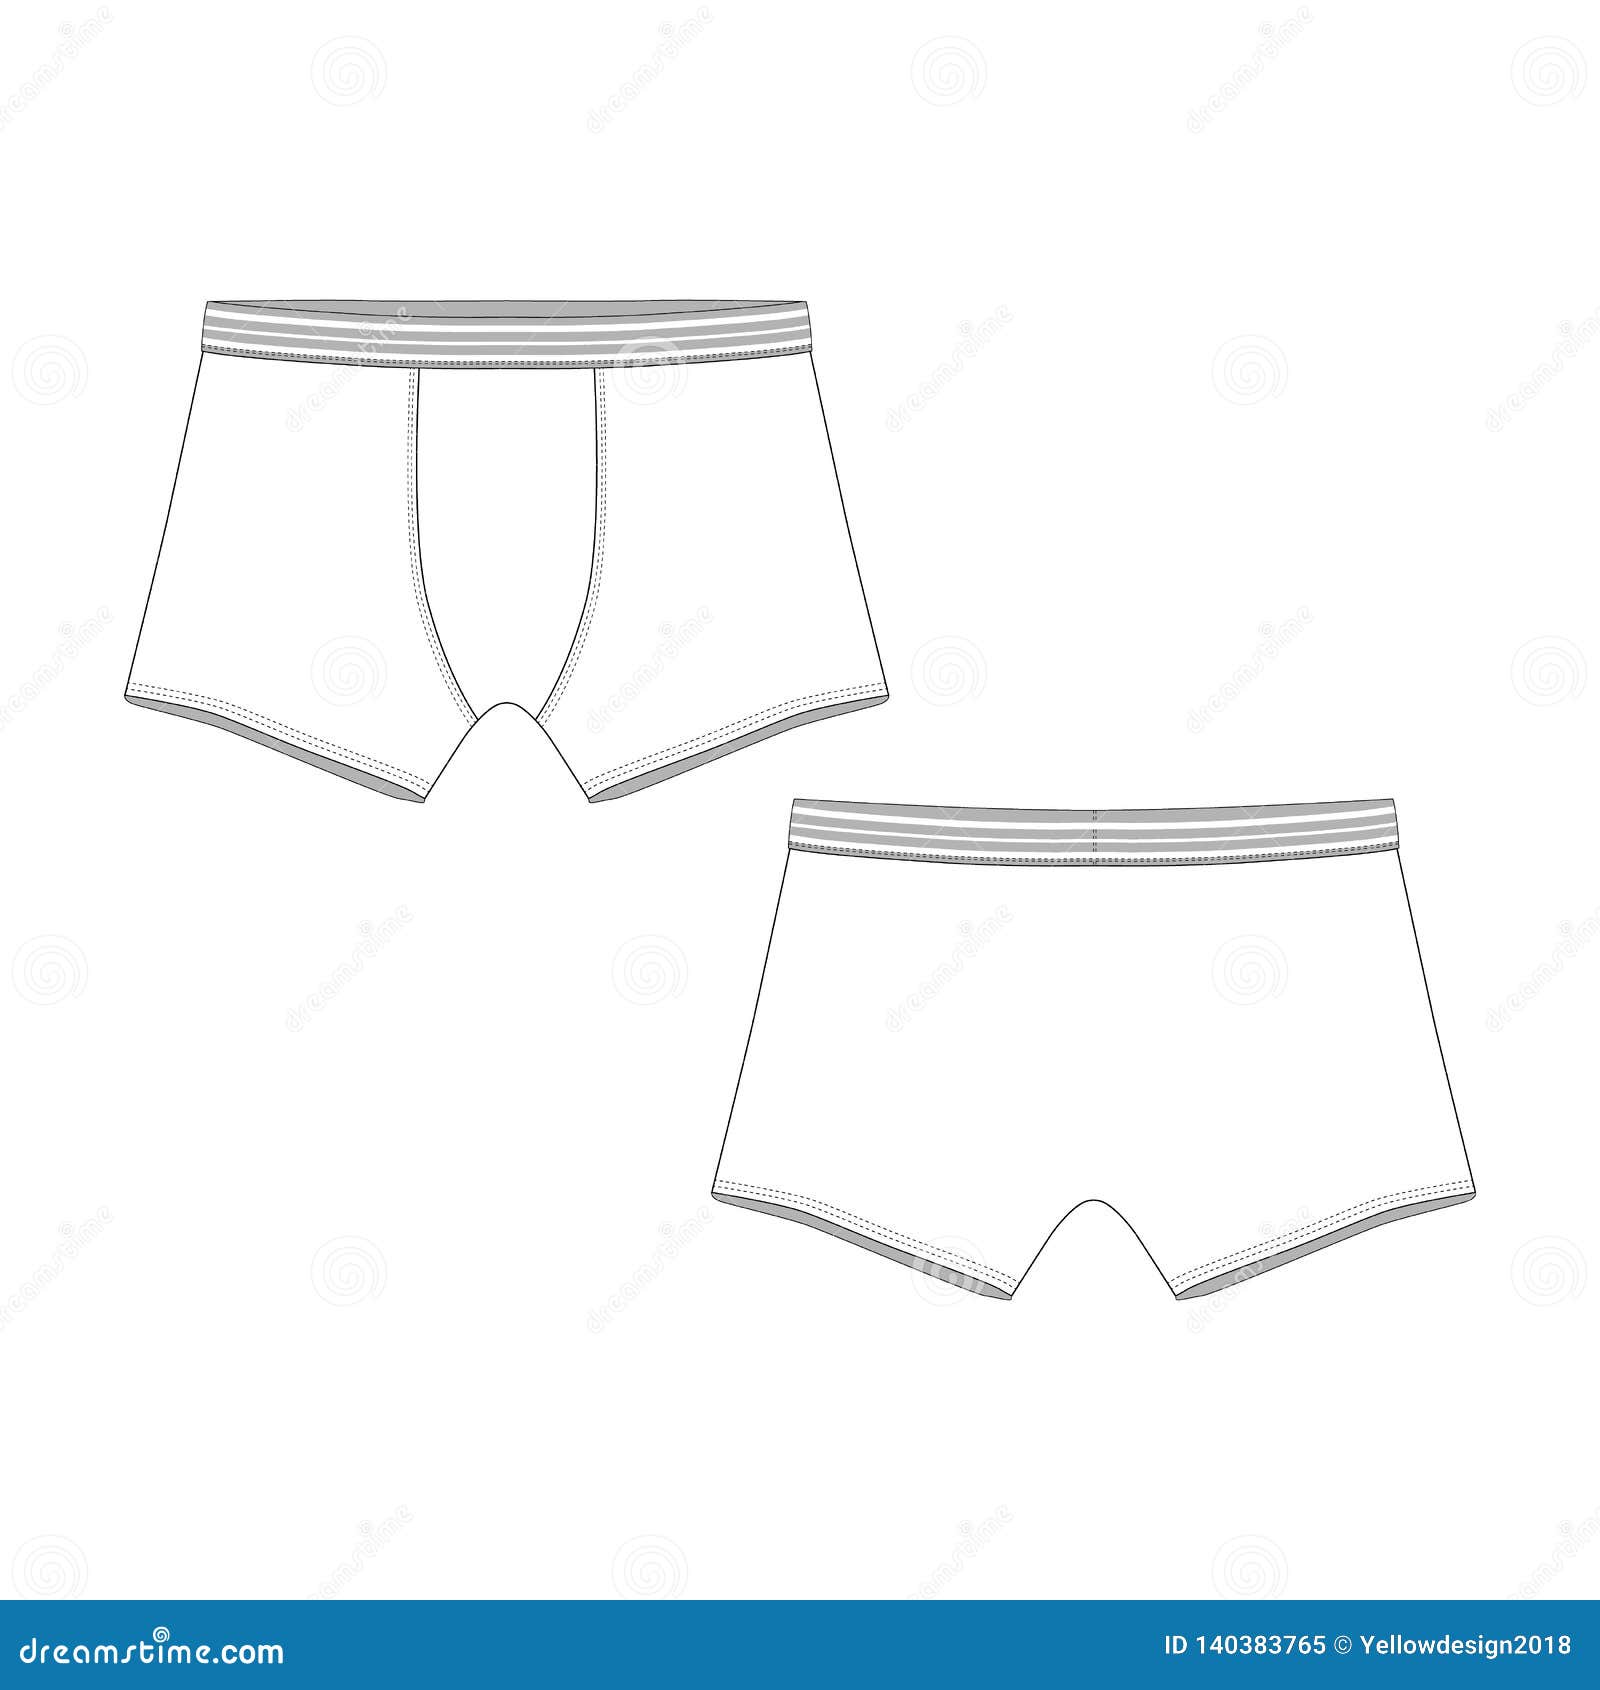 https://thumbs.dreamstime.com/z/vector-illustration-men-s-underpants-man-underwear-technical-sketch-boxer-shorts-man-underwear-technical-sketch-boxer-shorts-140383765.jpg